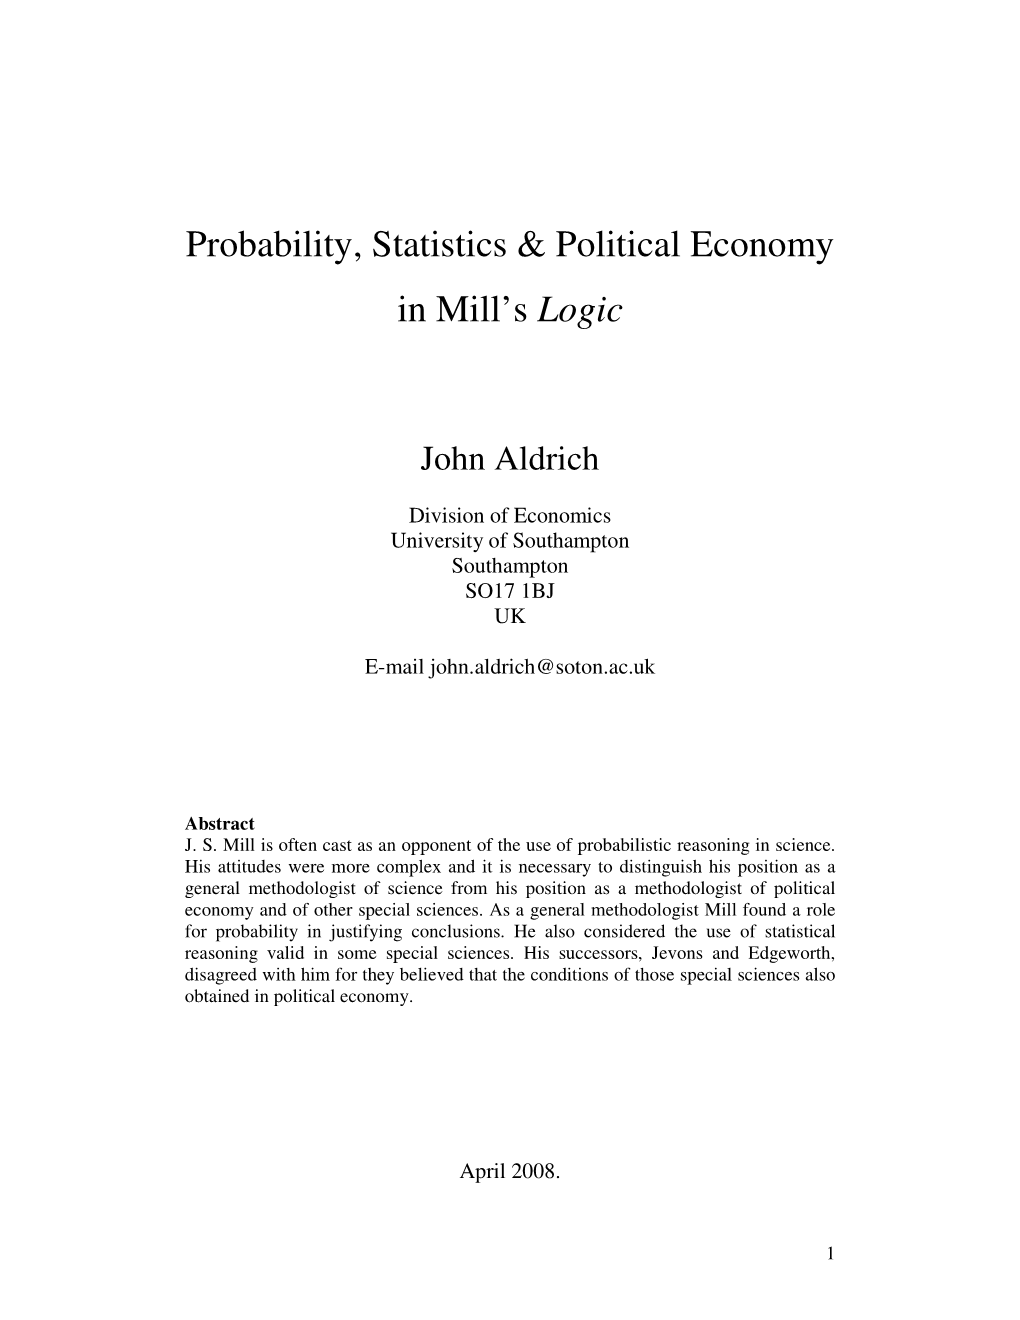 Probability, Statistics & Political Economy in Mill's Logic